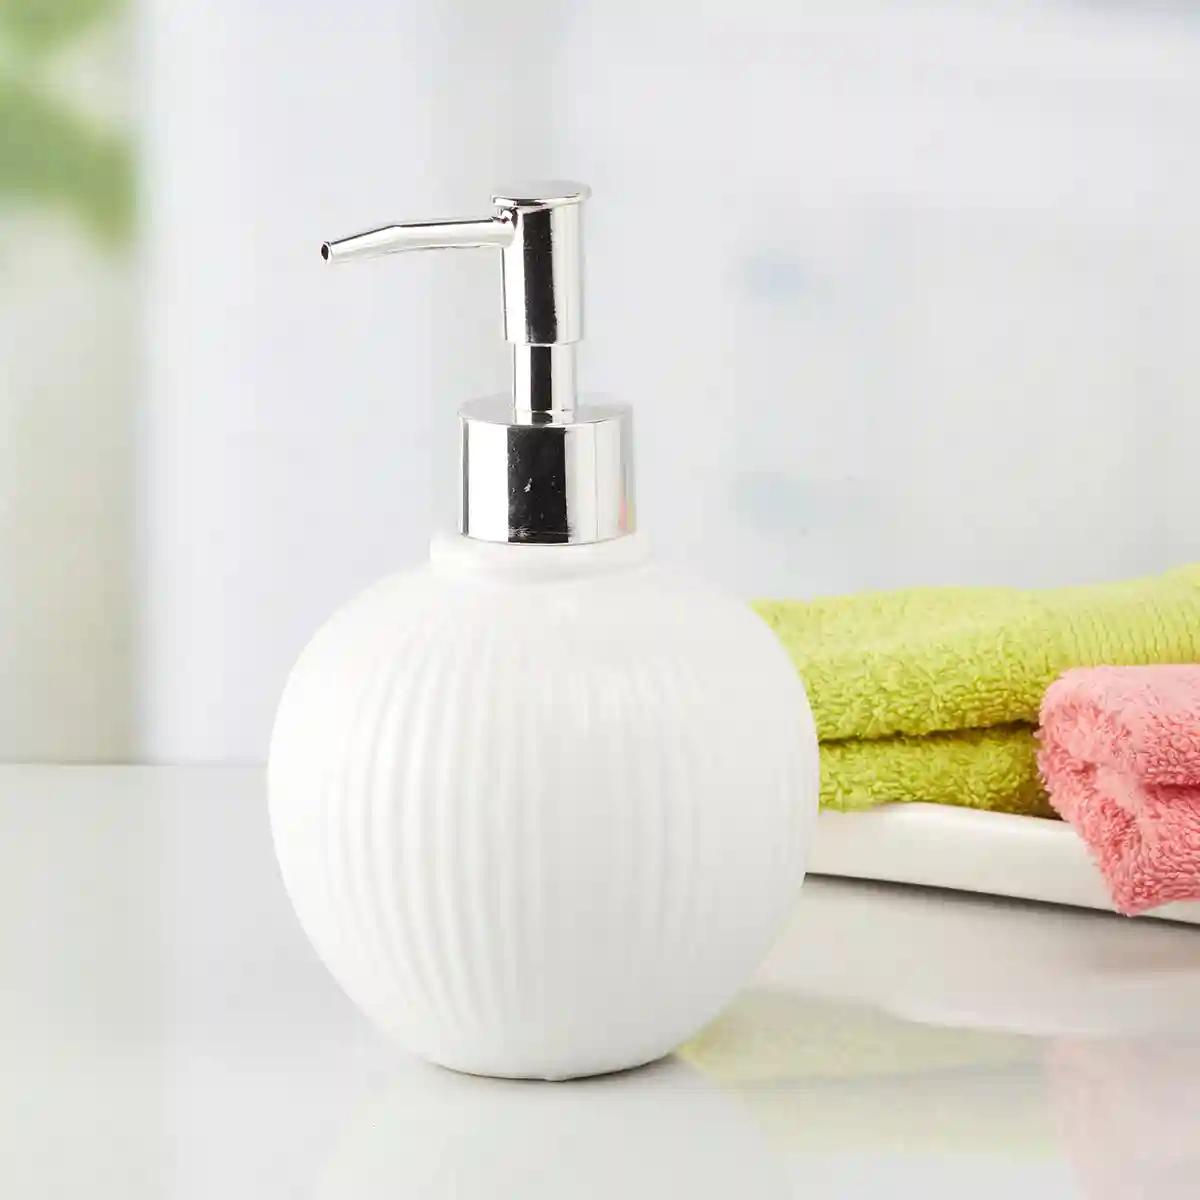 Kookee Ceramic Soap Dispenser for Bathroom handwash, refillable pump bottle for Kitchen hand wash basin, Set of 2 - White (8048)